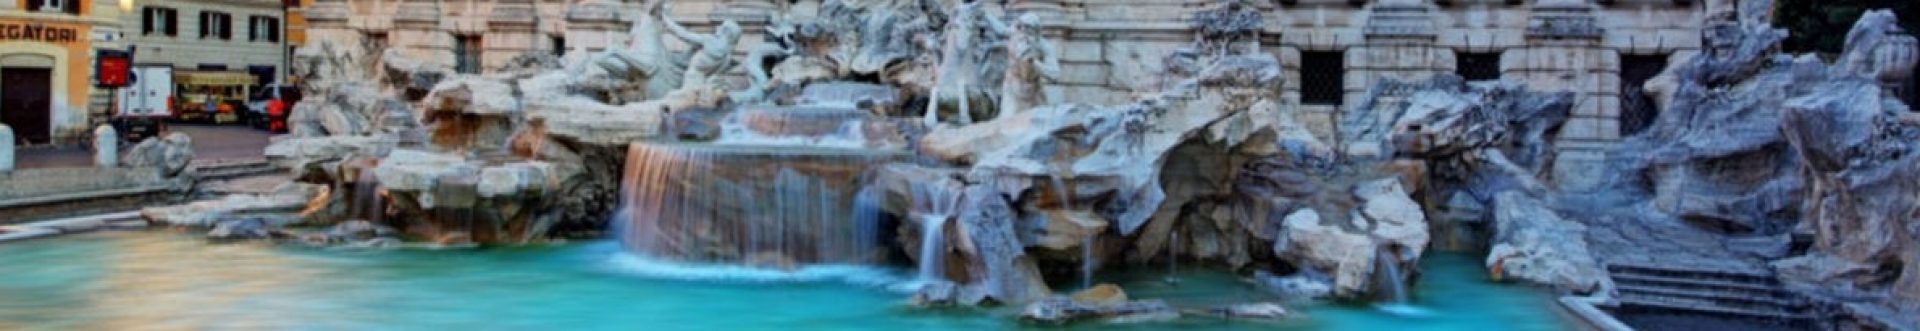 Hilti jobsite reference trevi fountain Rome Italy